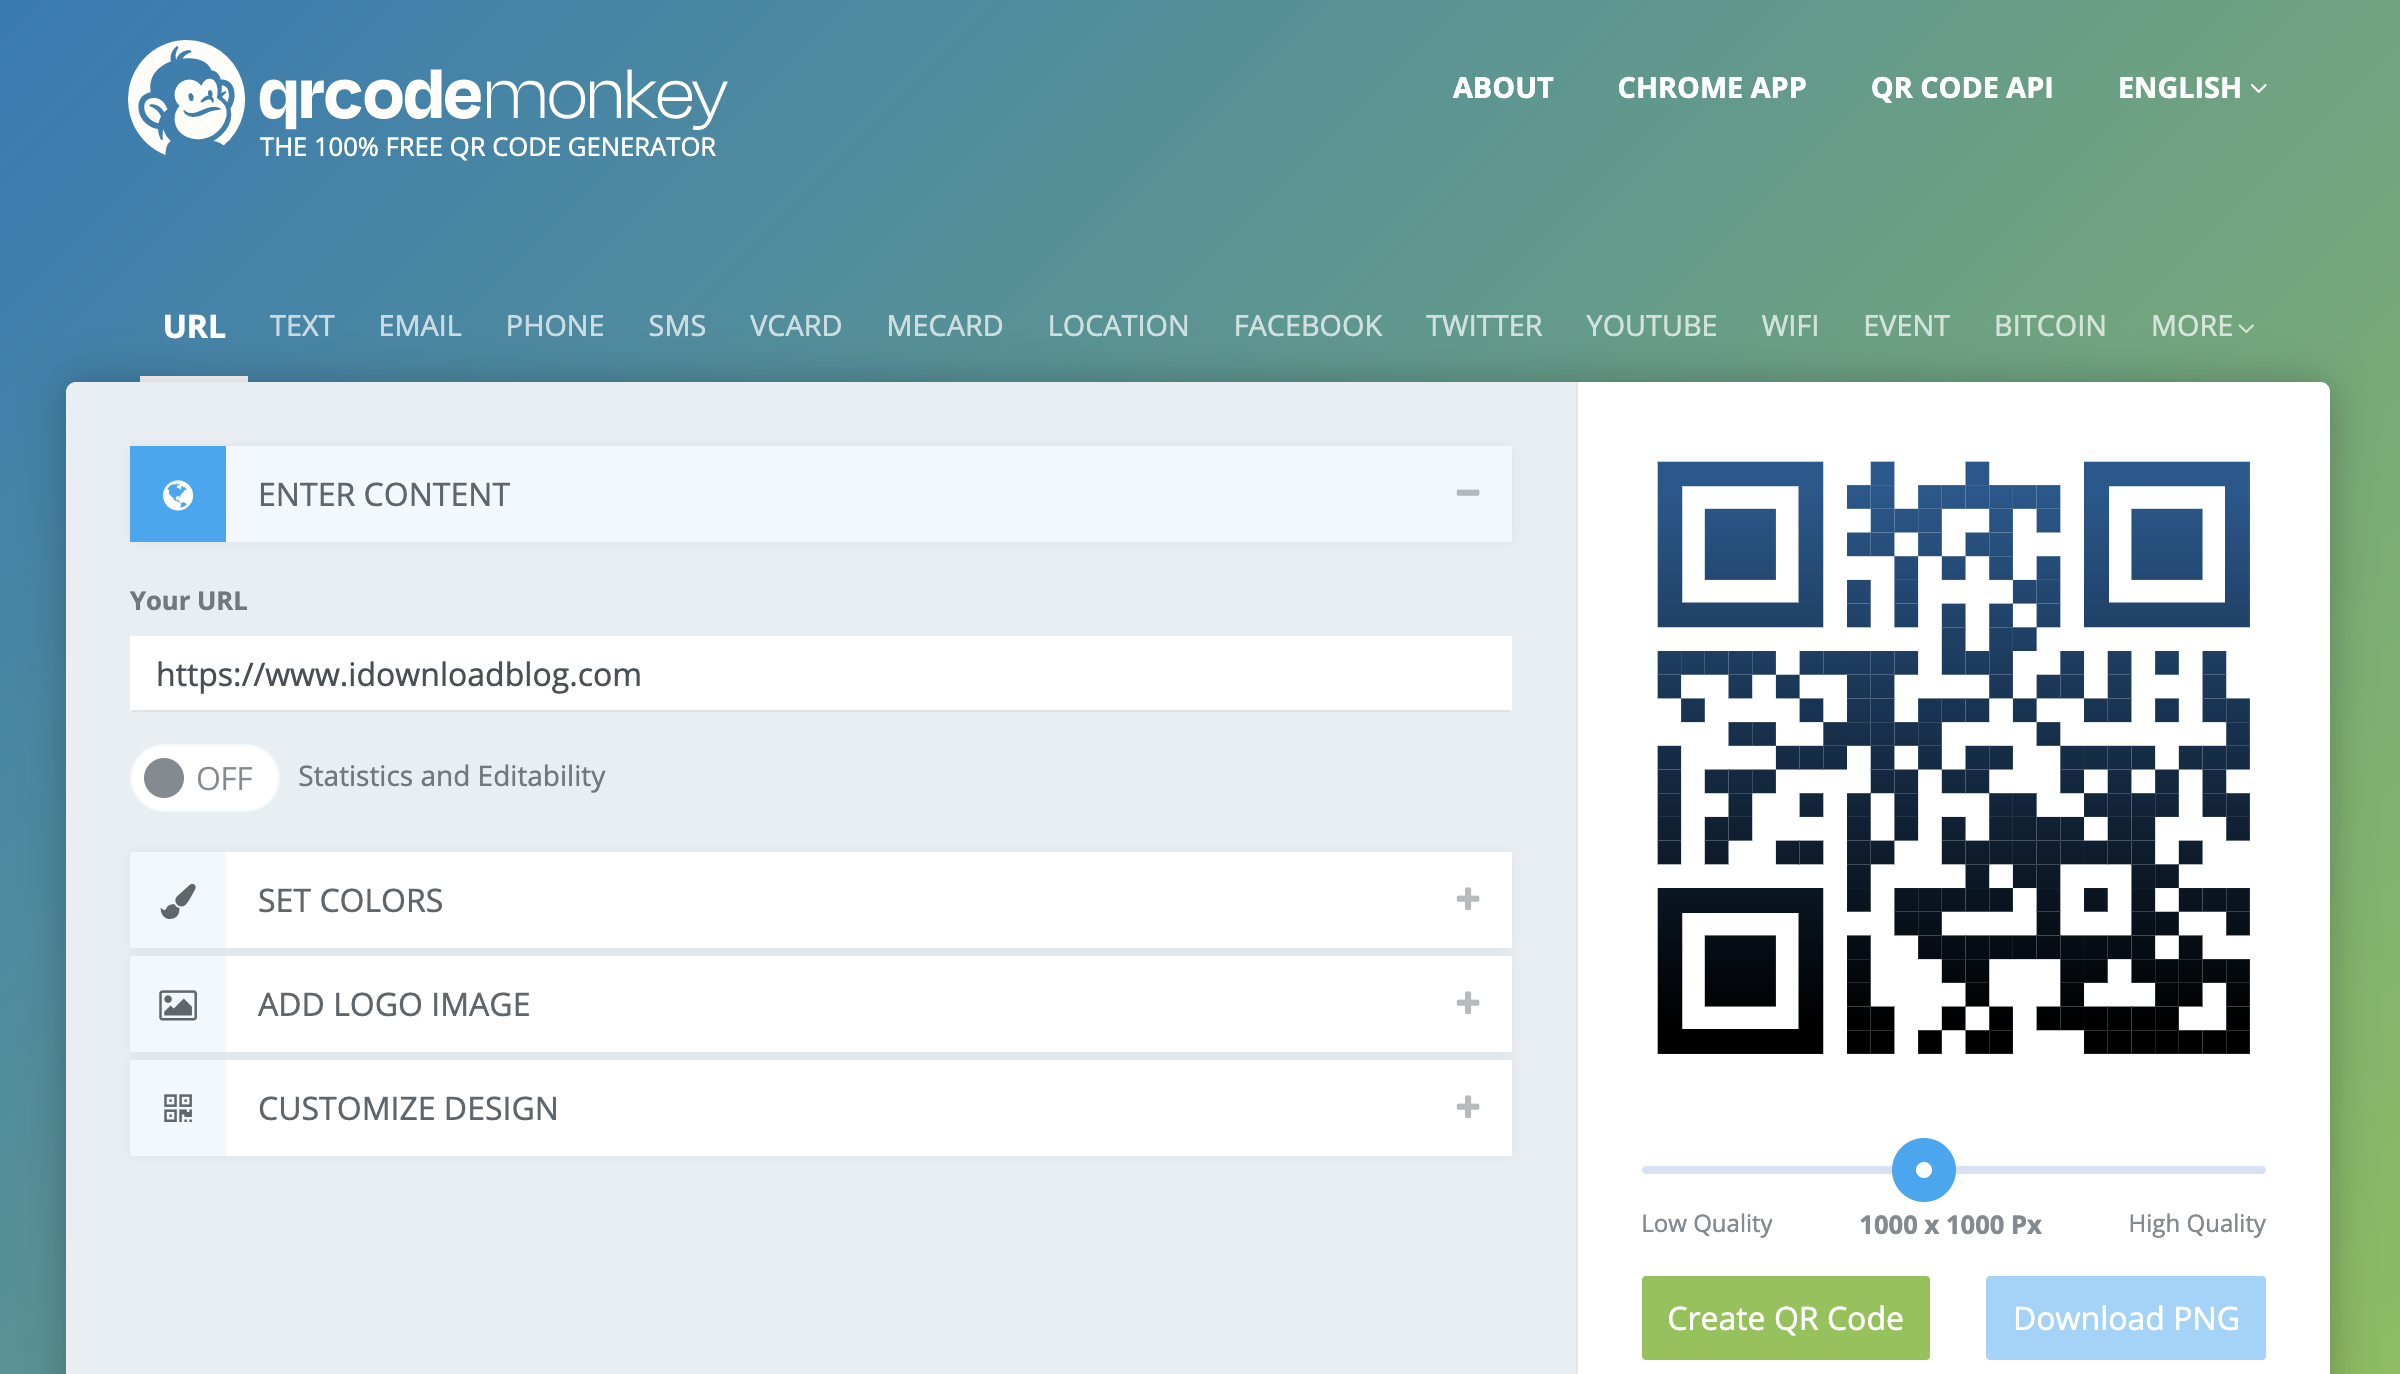 qrcode monkey to create QR code on Mac